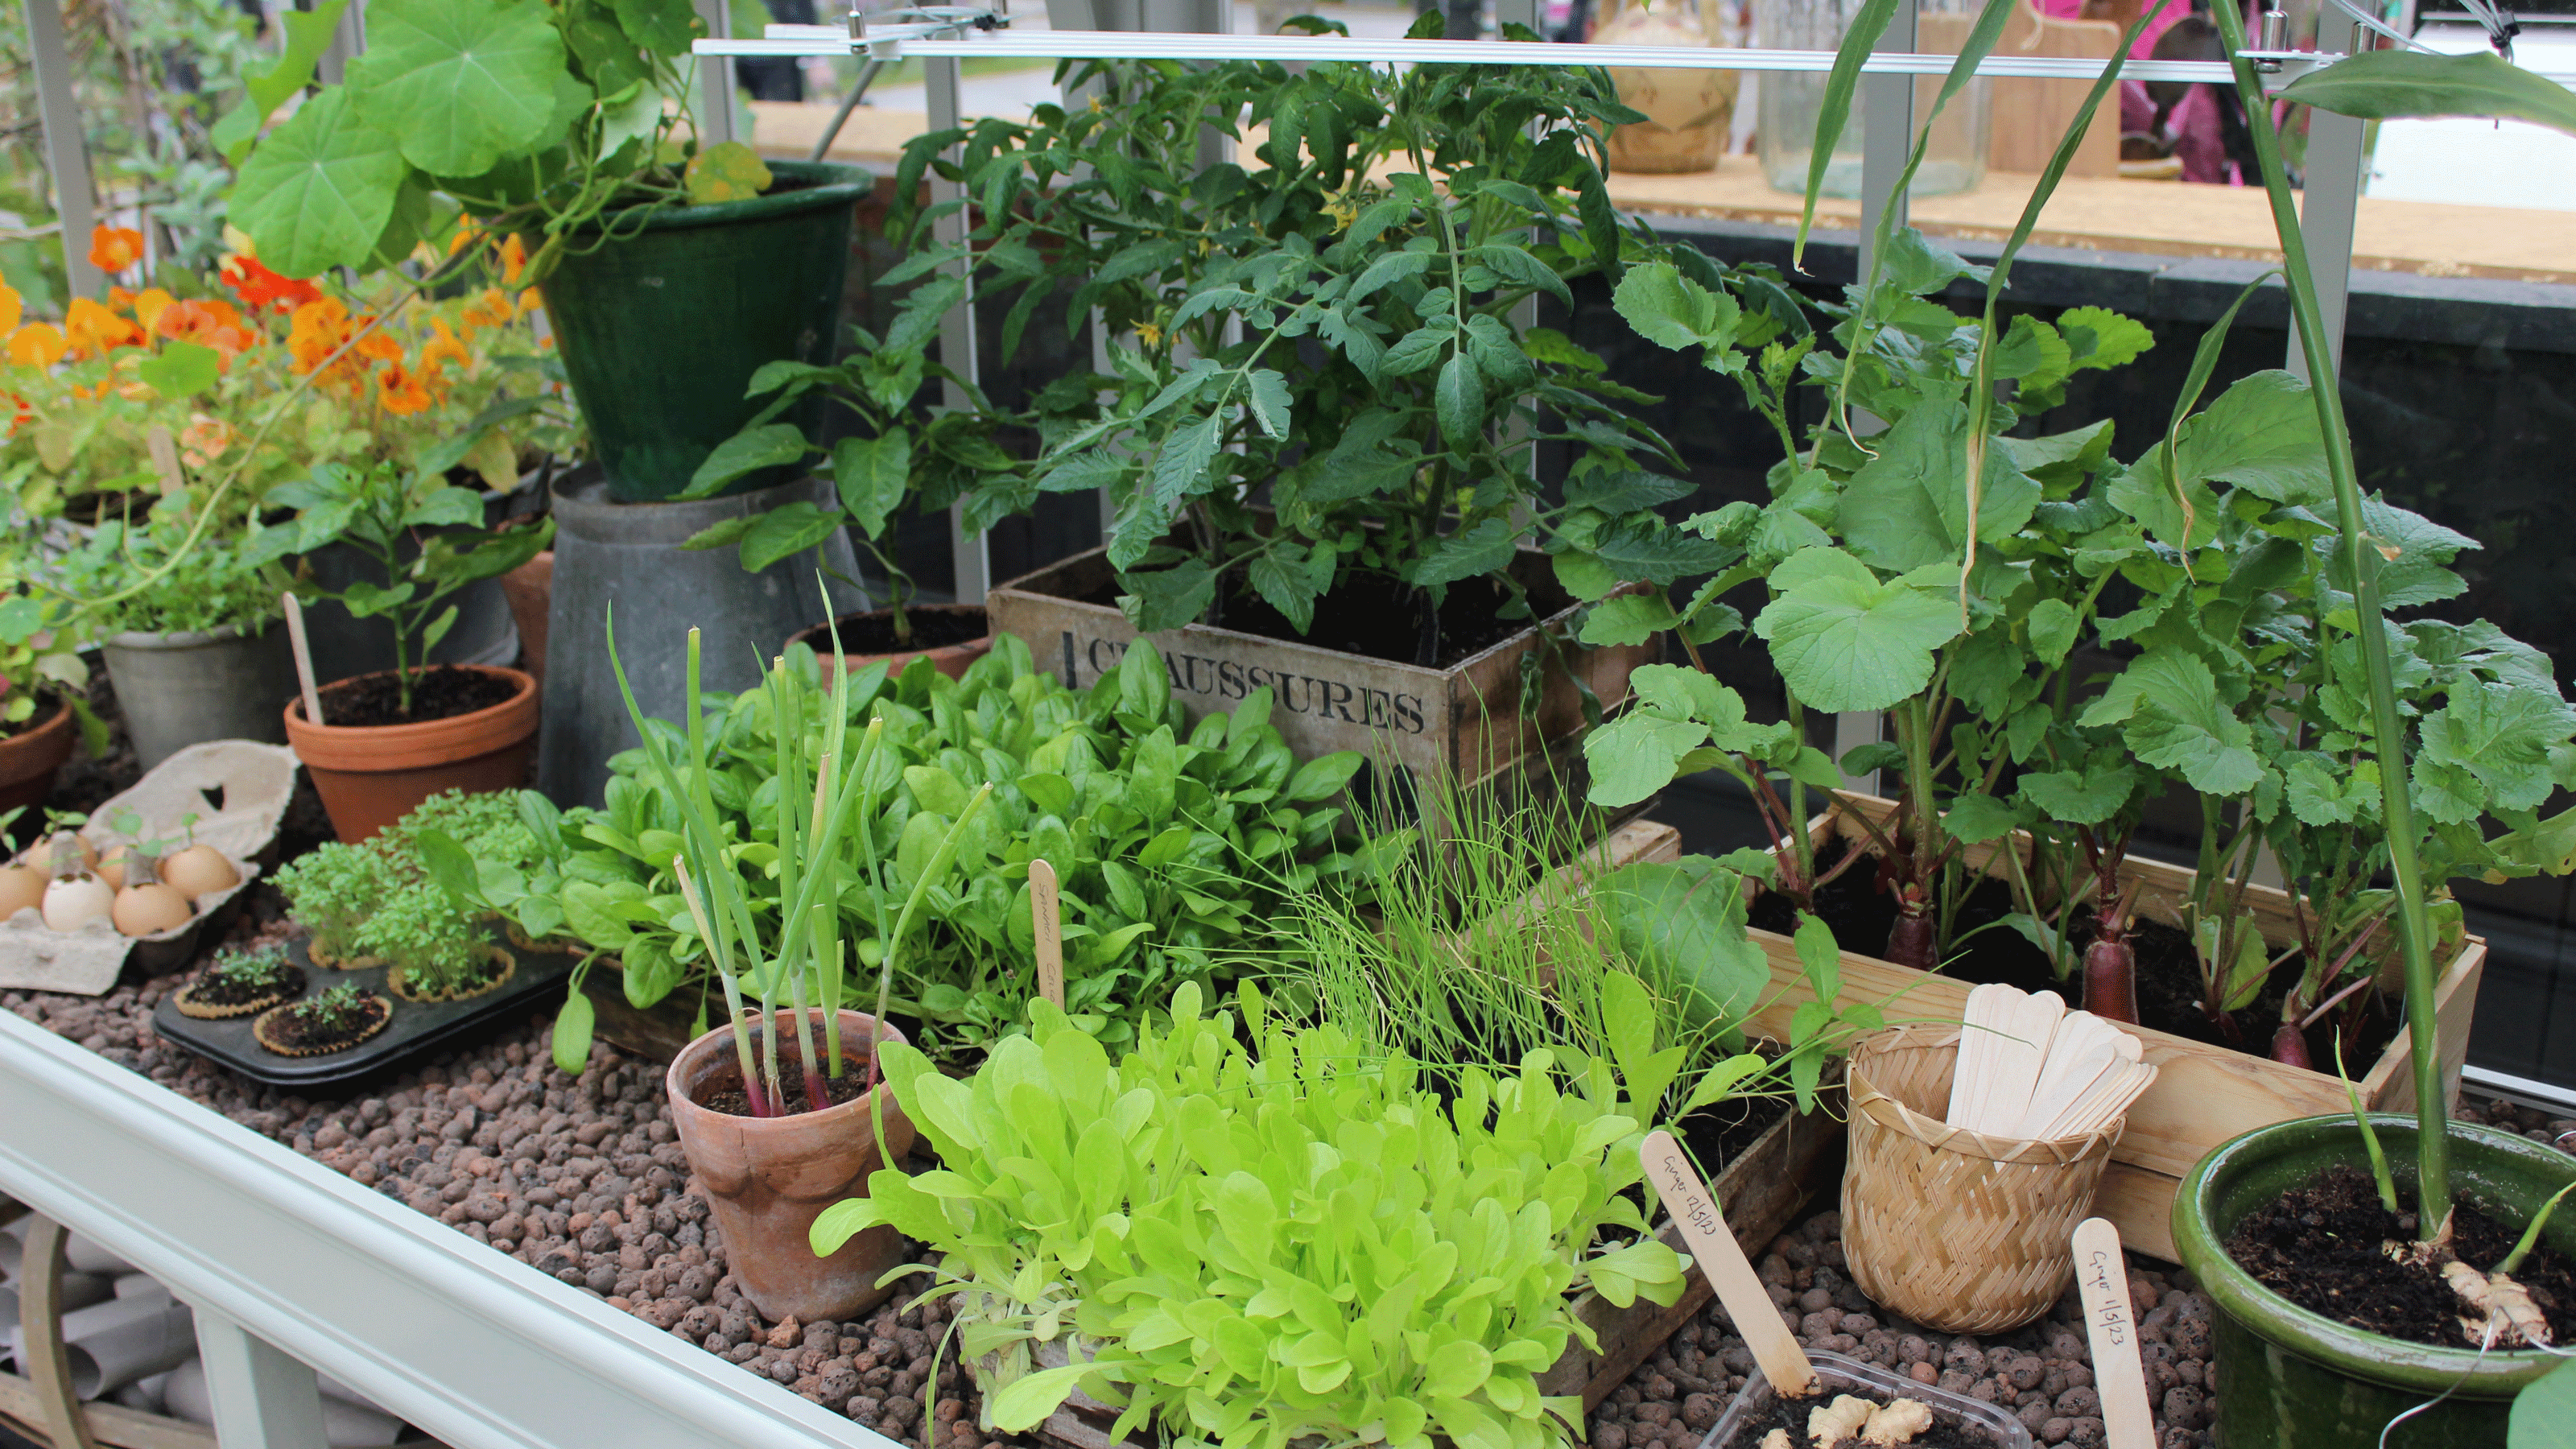 A basket of beetroot in a vegetable garden